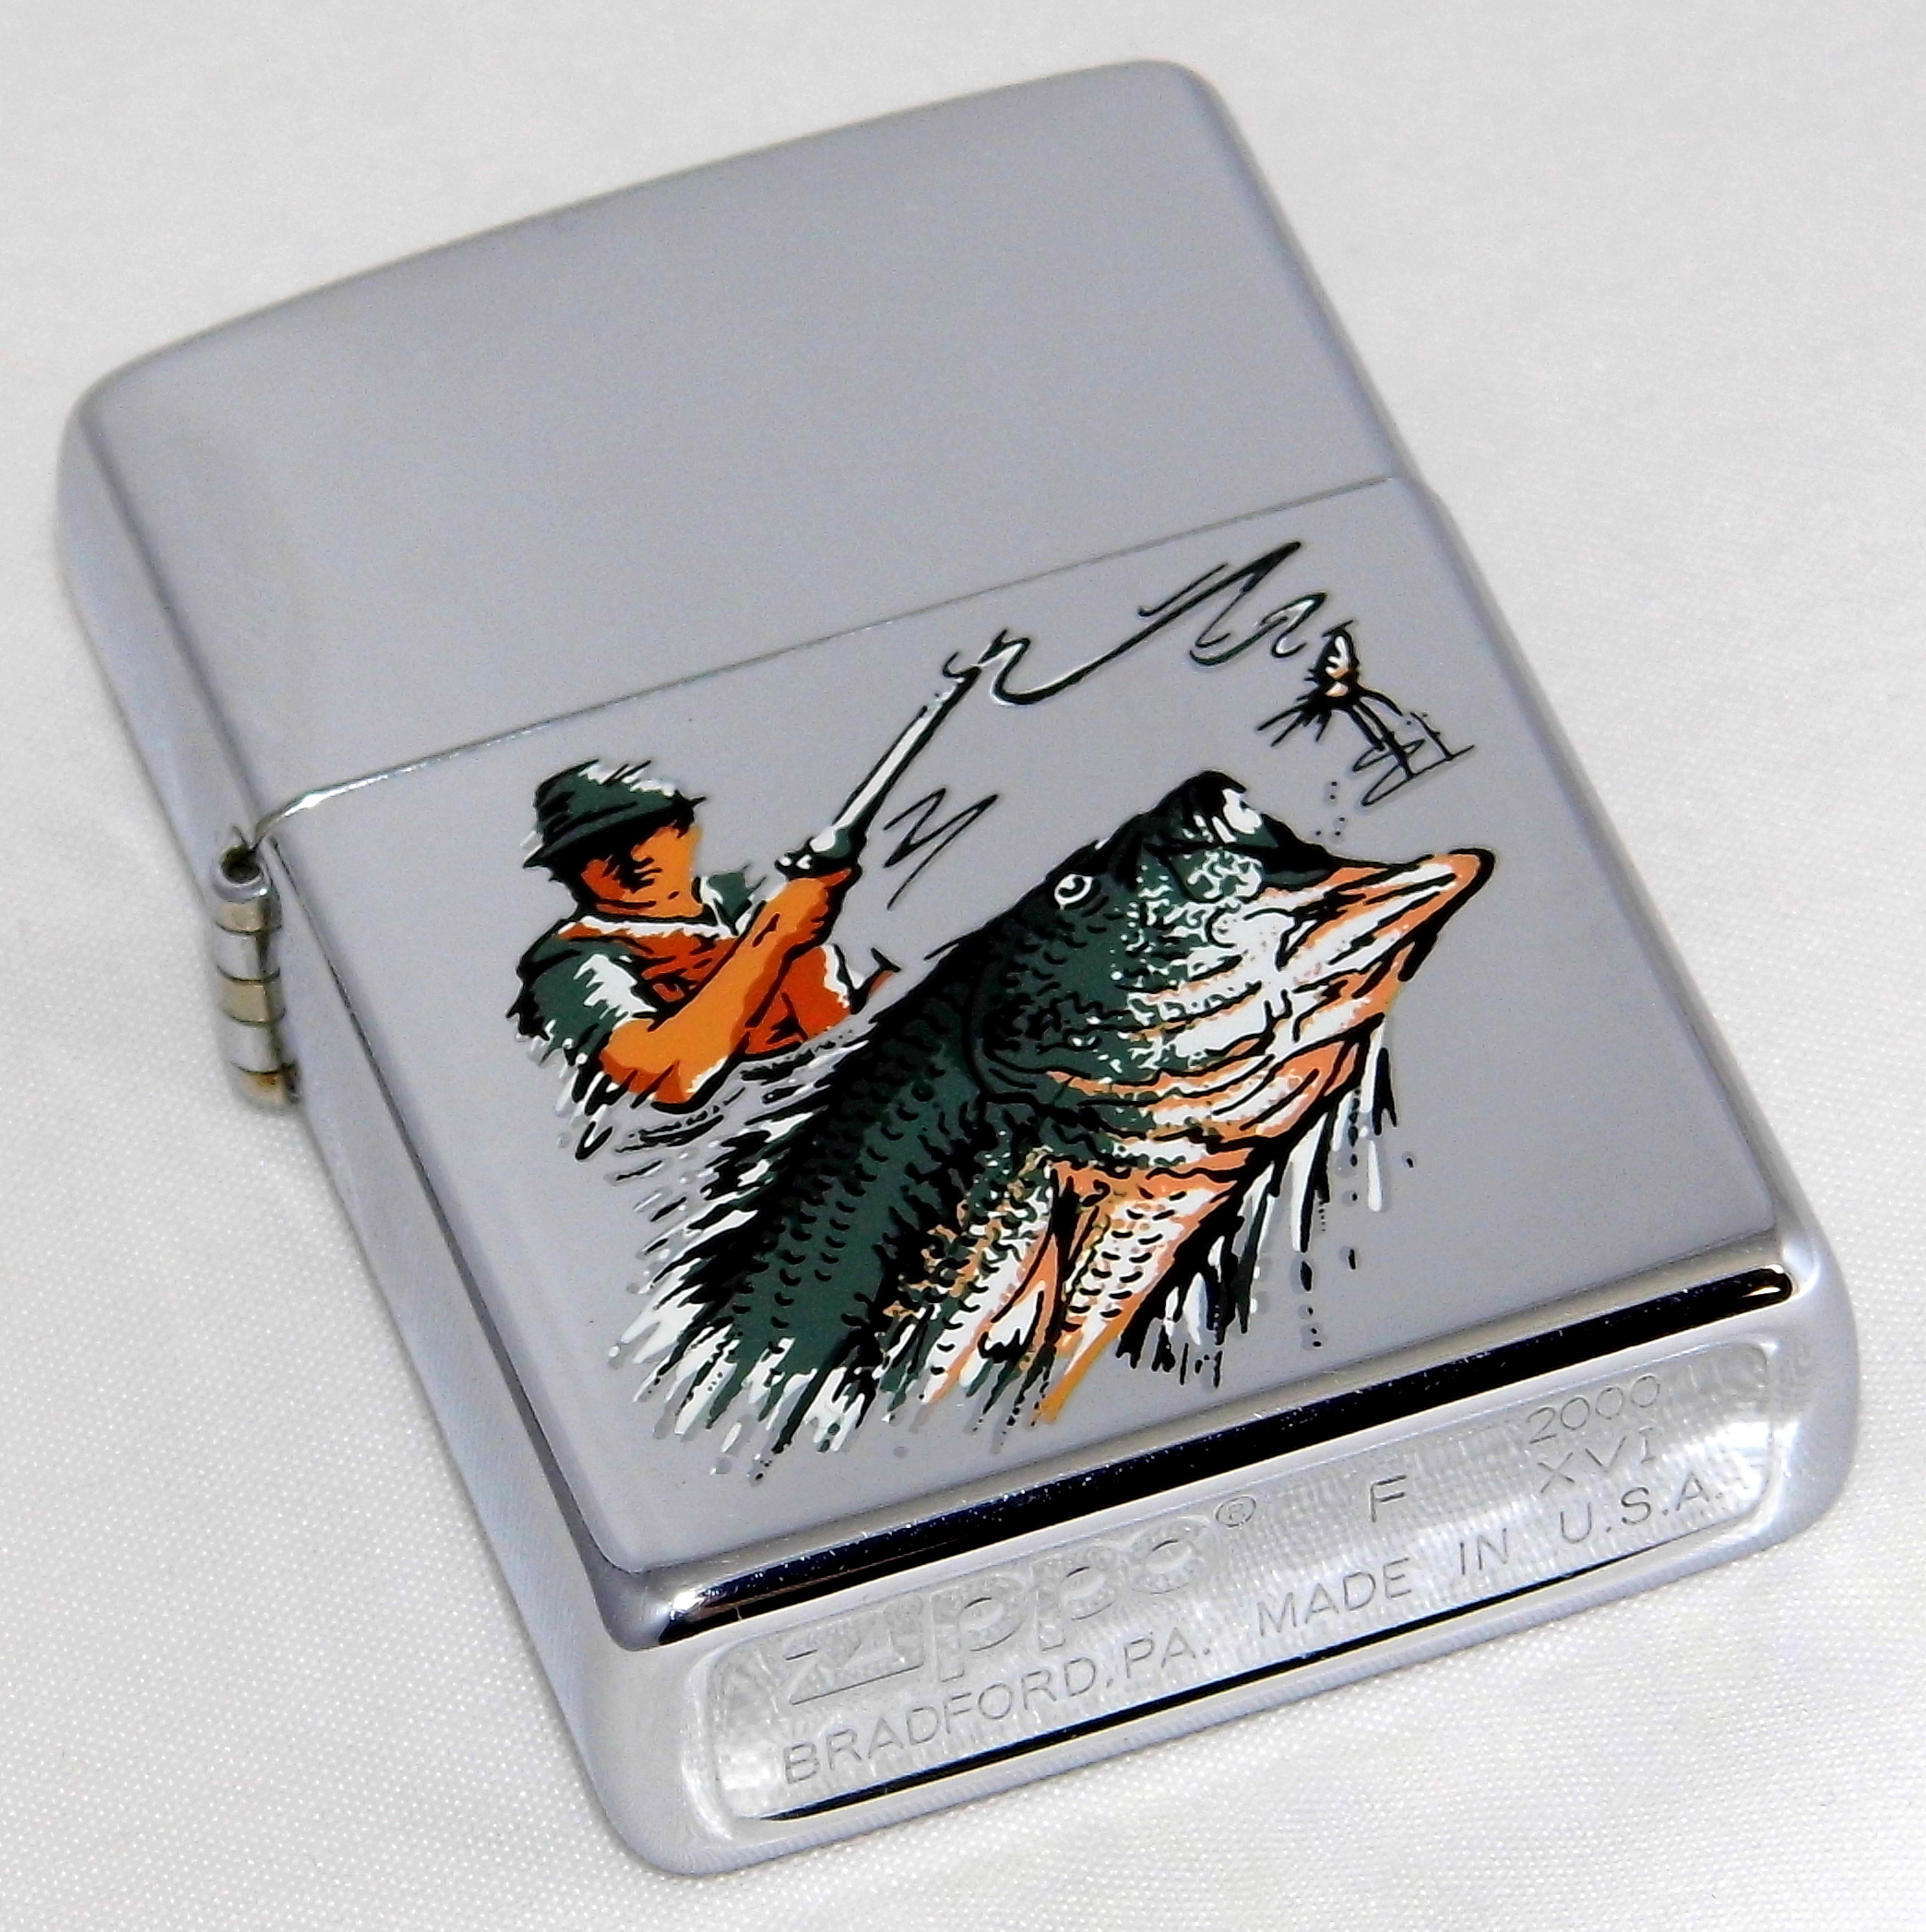 File:Zippo Cigarette Lighter With Fishing Scene, Made In USA